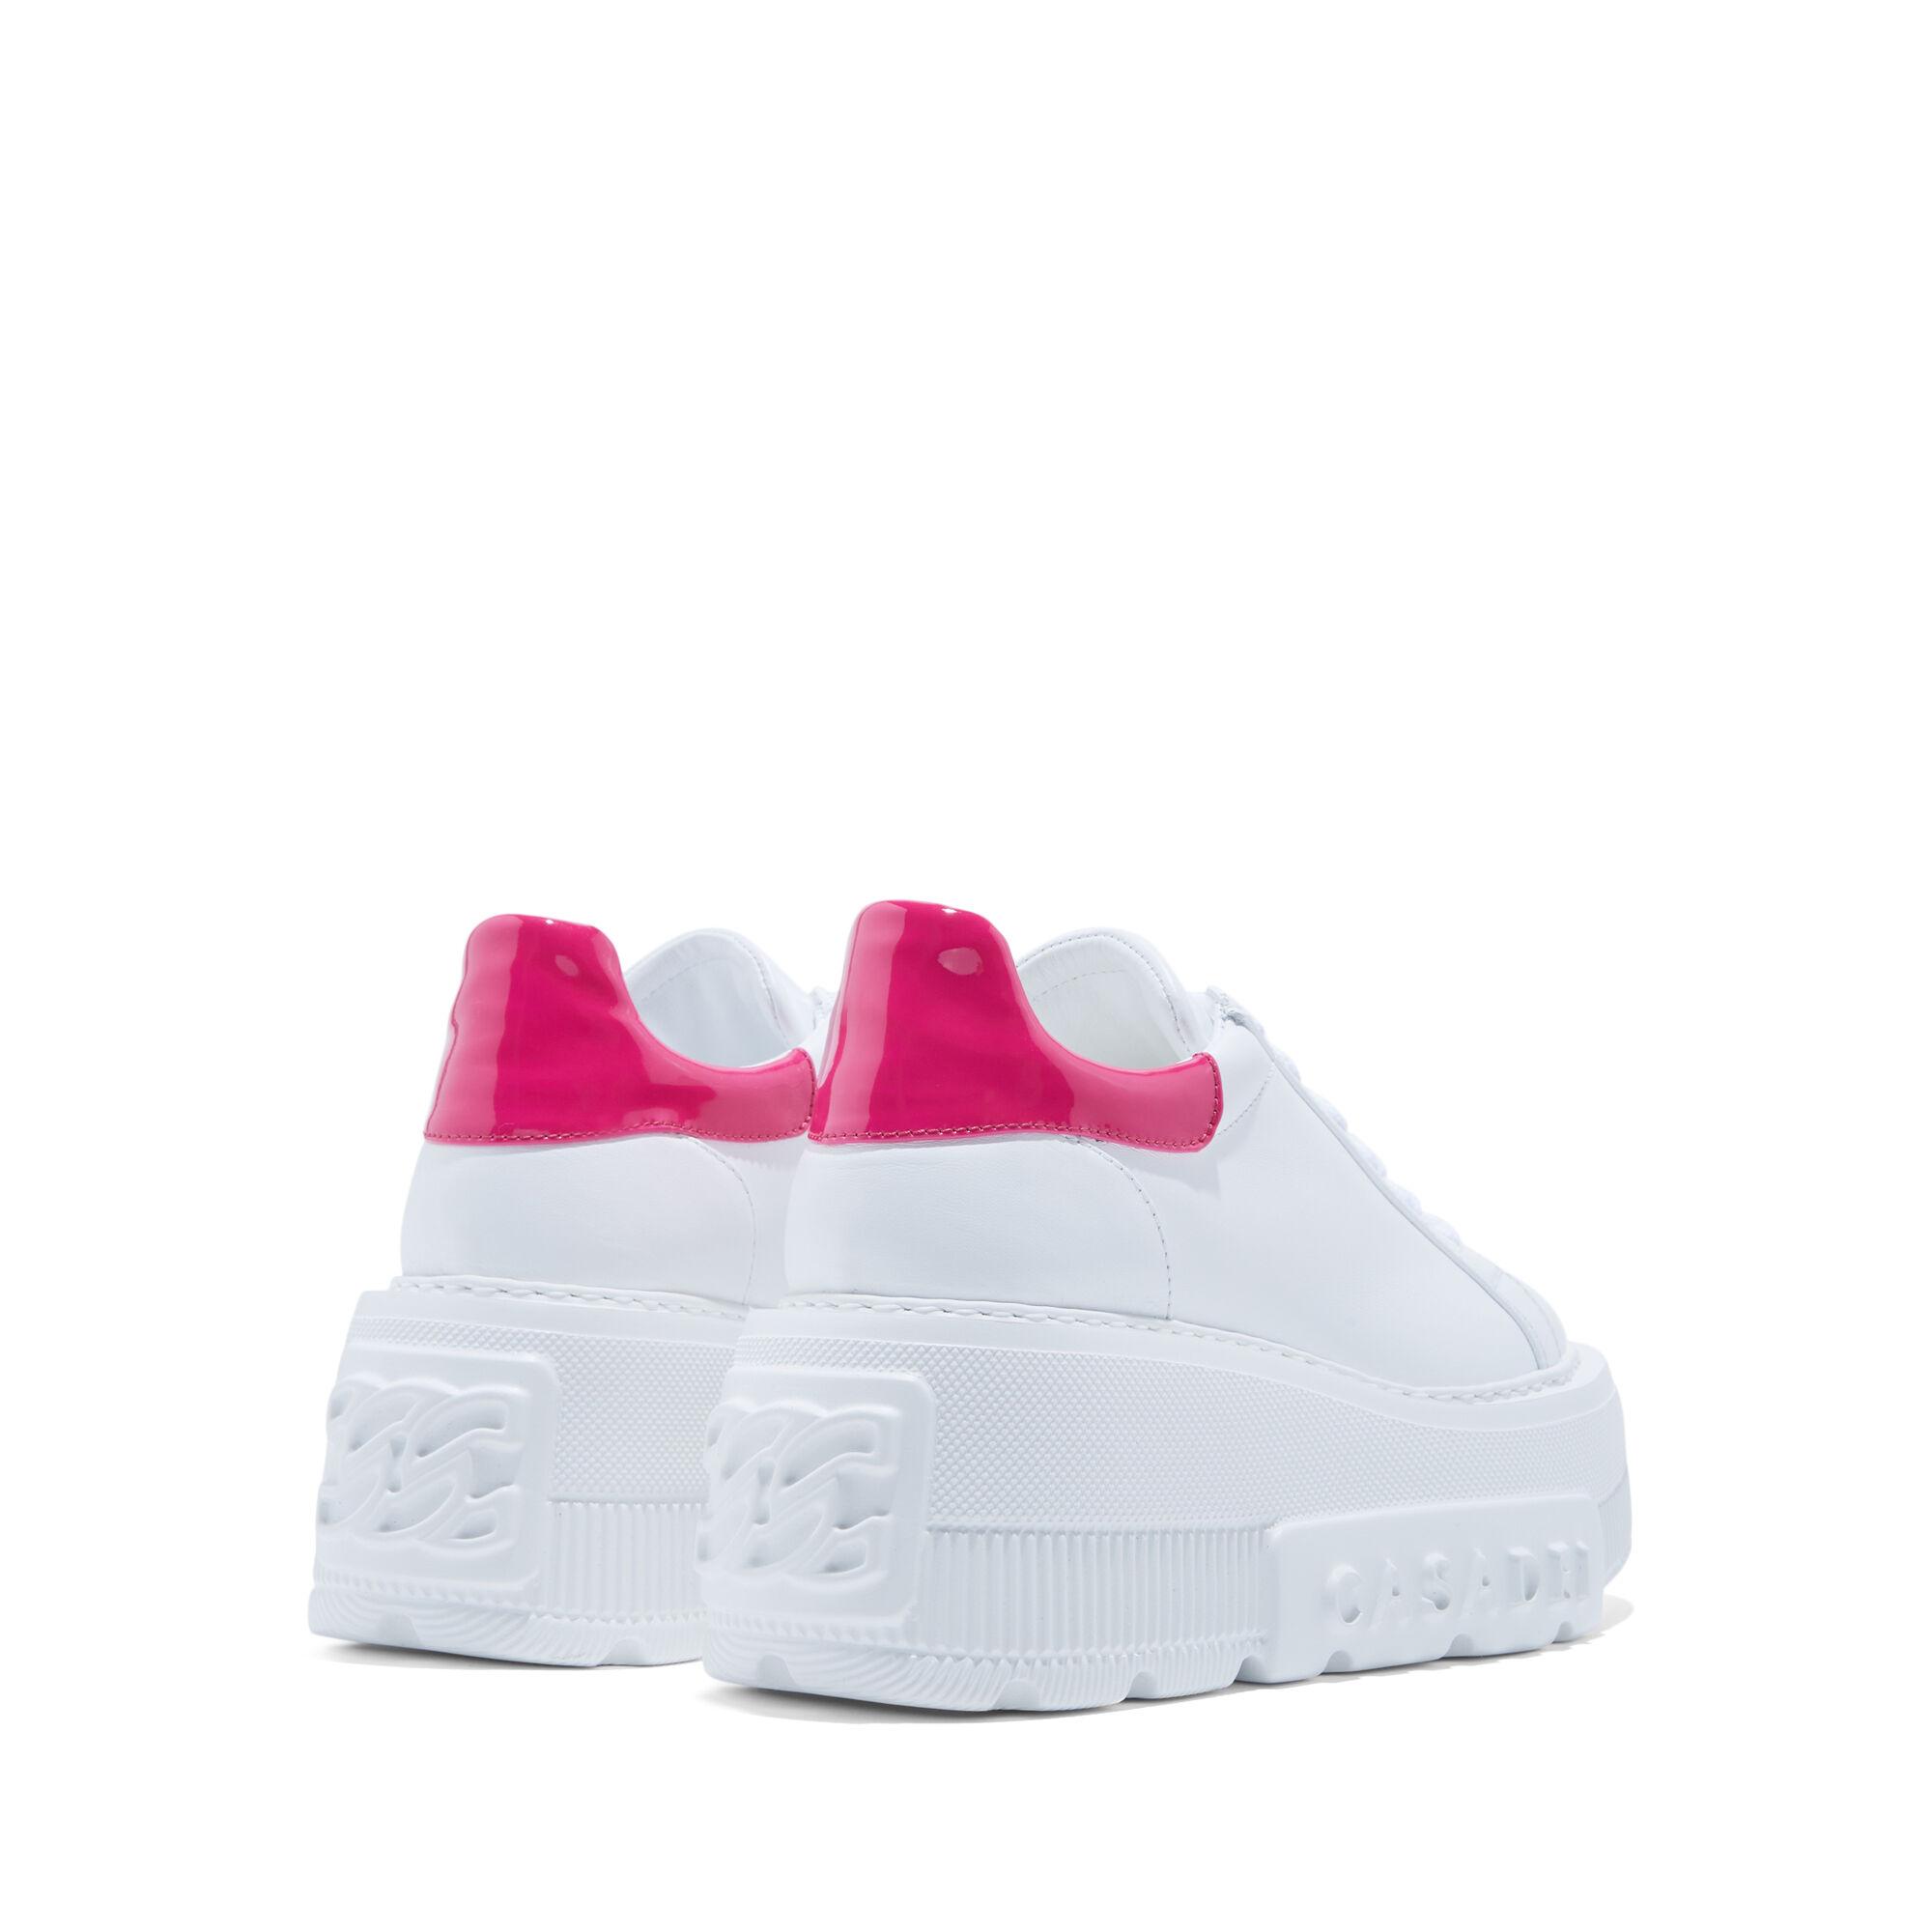 Casadei Nexus Tiffany Sneakers in White | Lyst